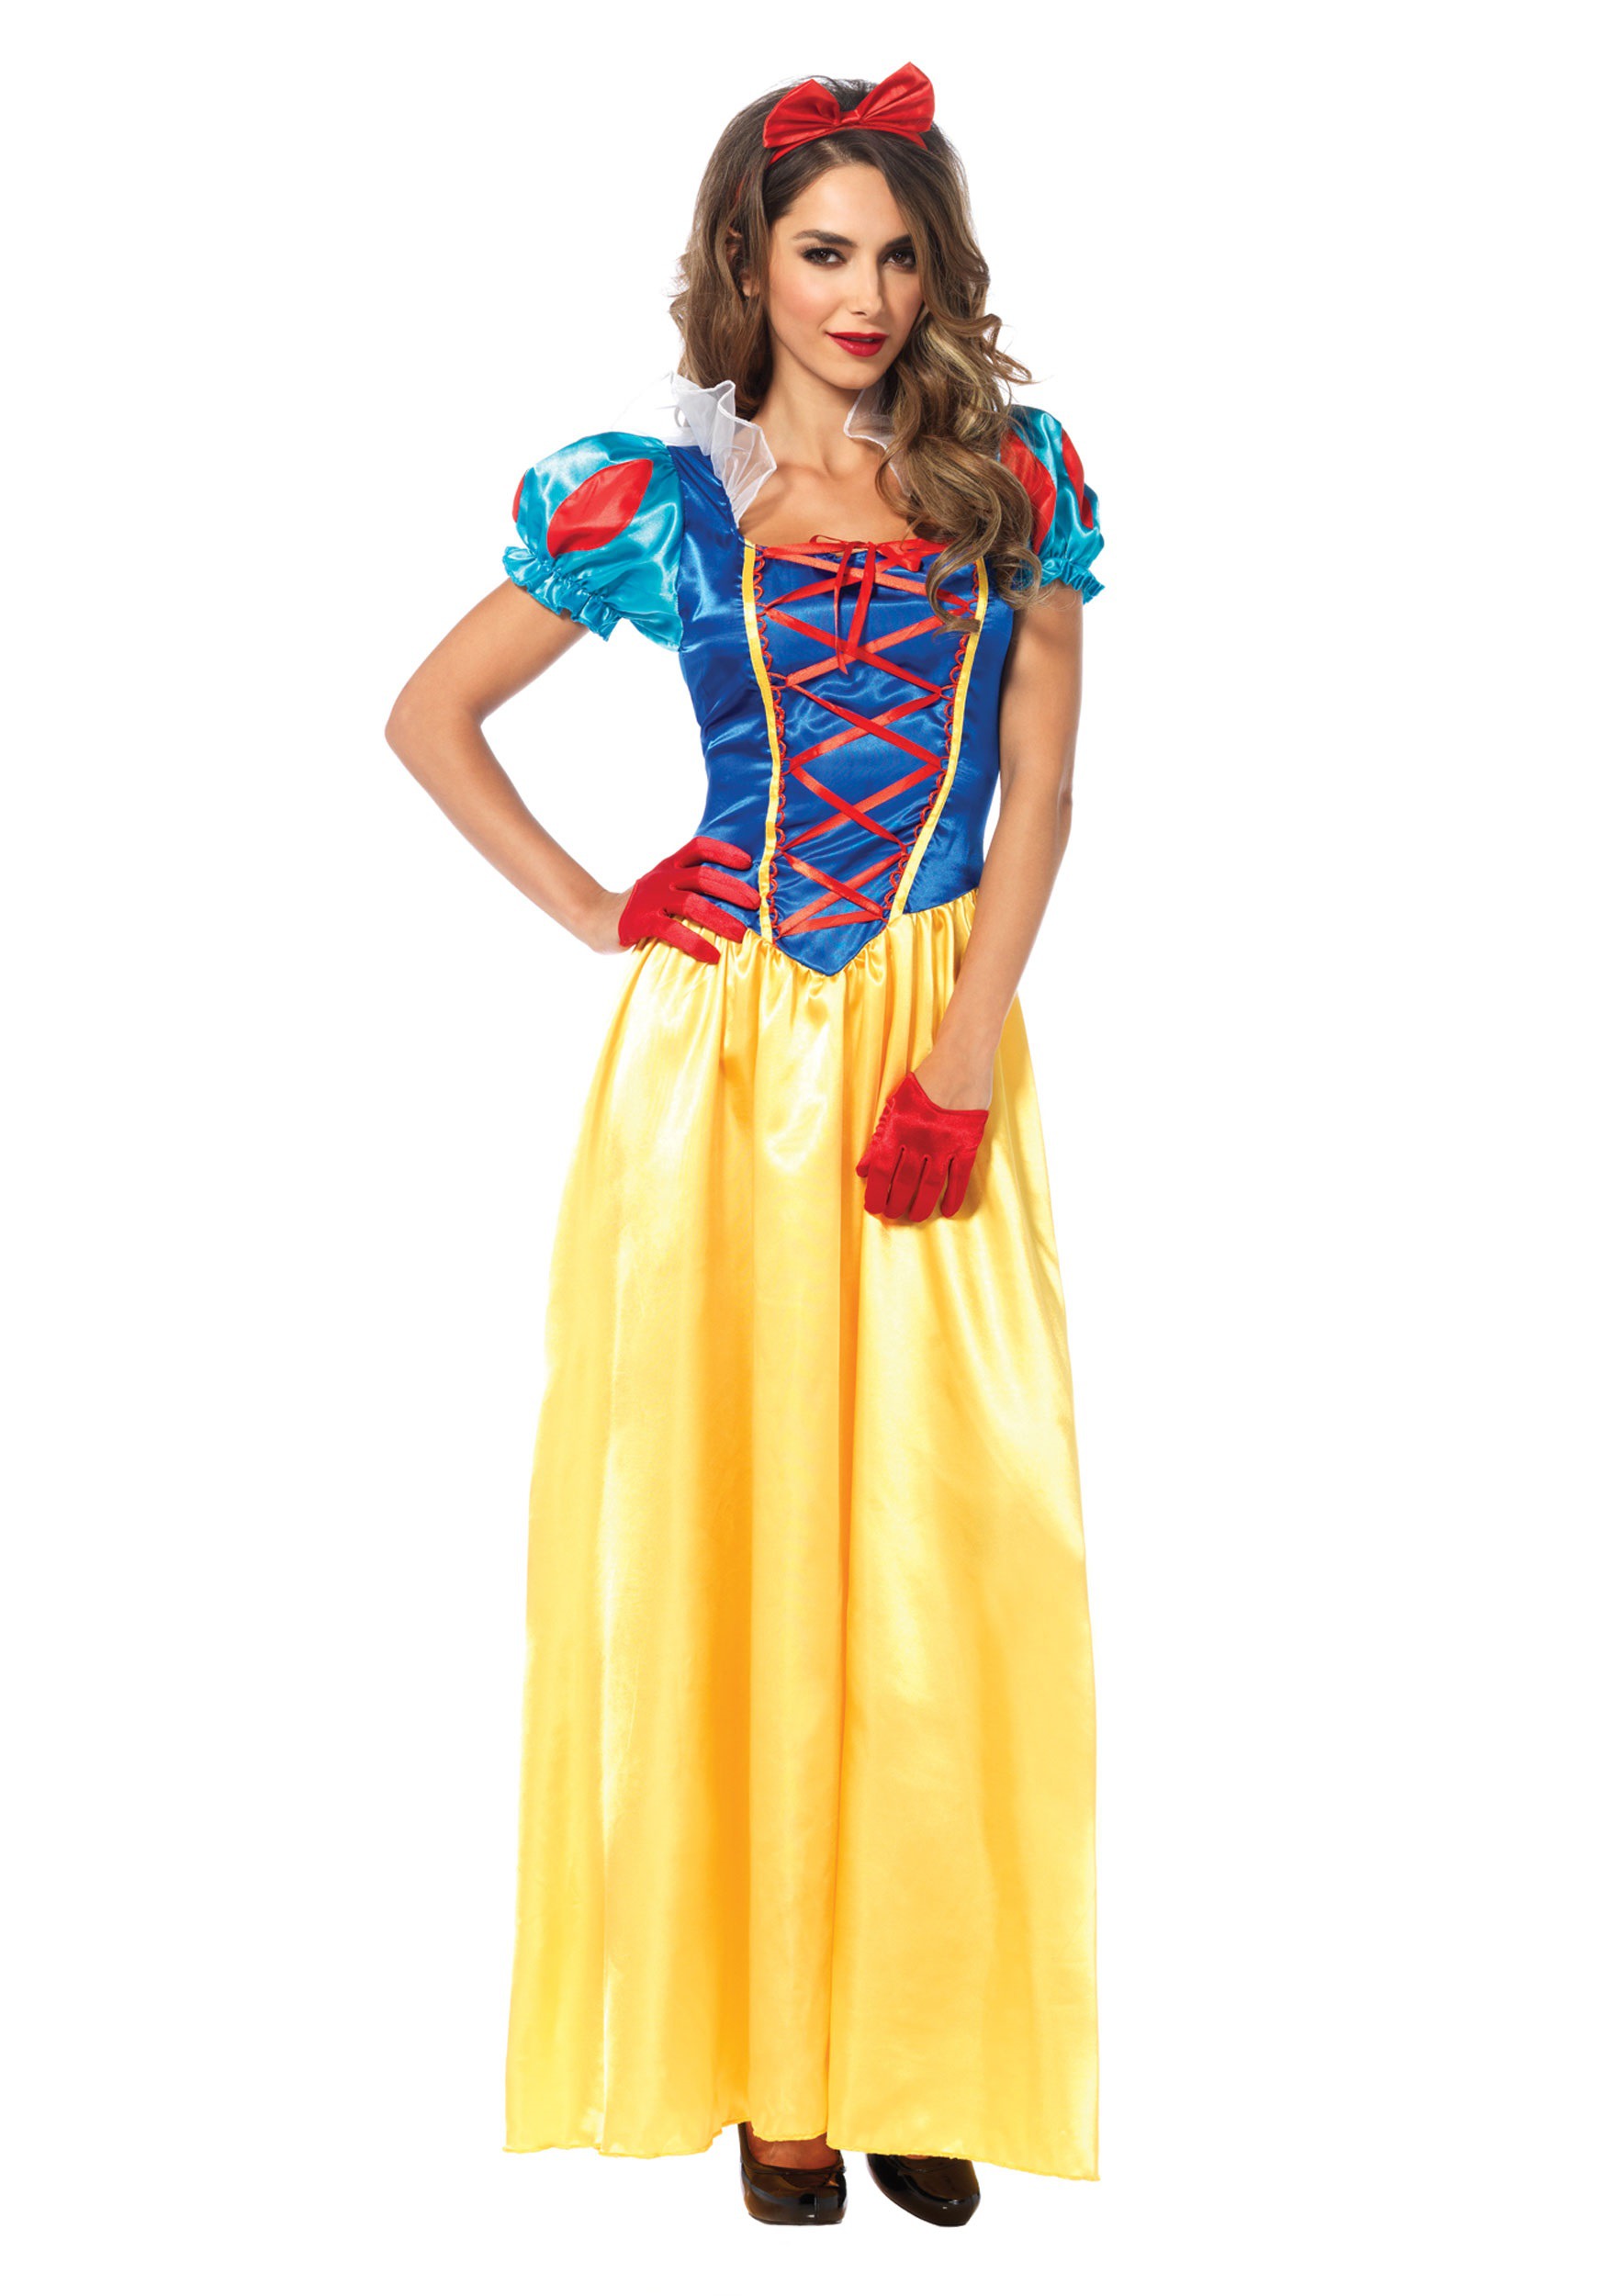 Women's Fairytale Snow White Princess Halloween Costume Dress Headband Bow Set 